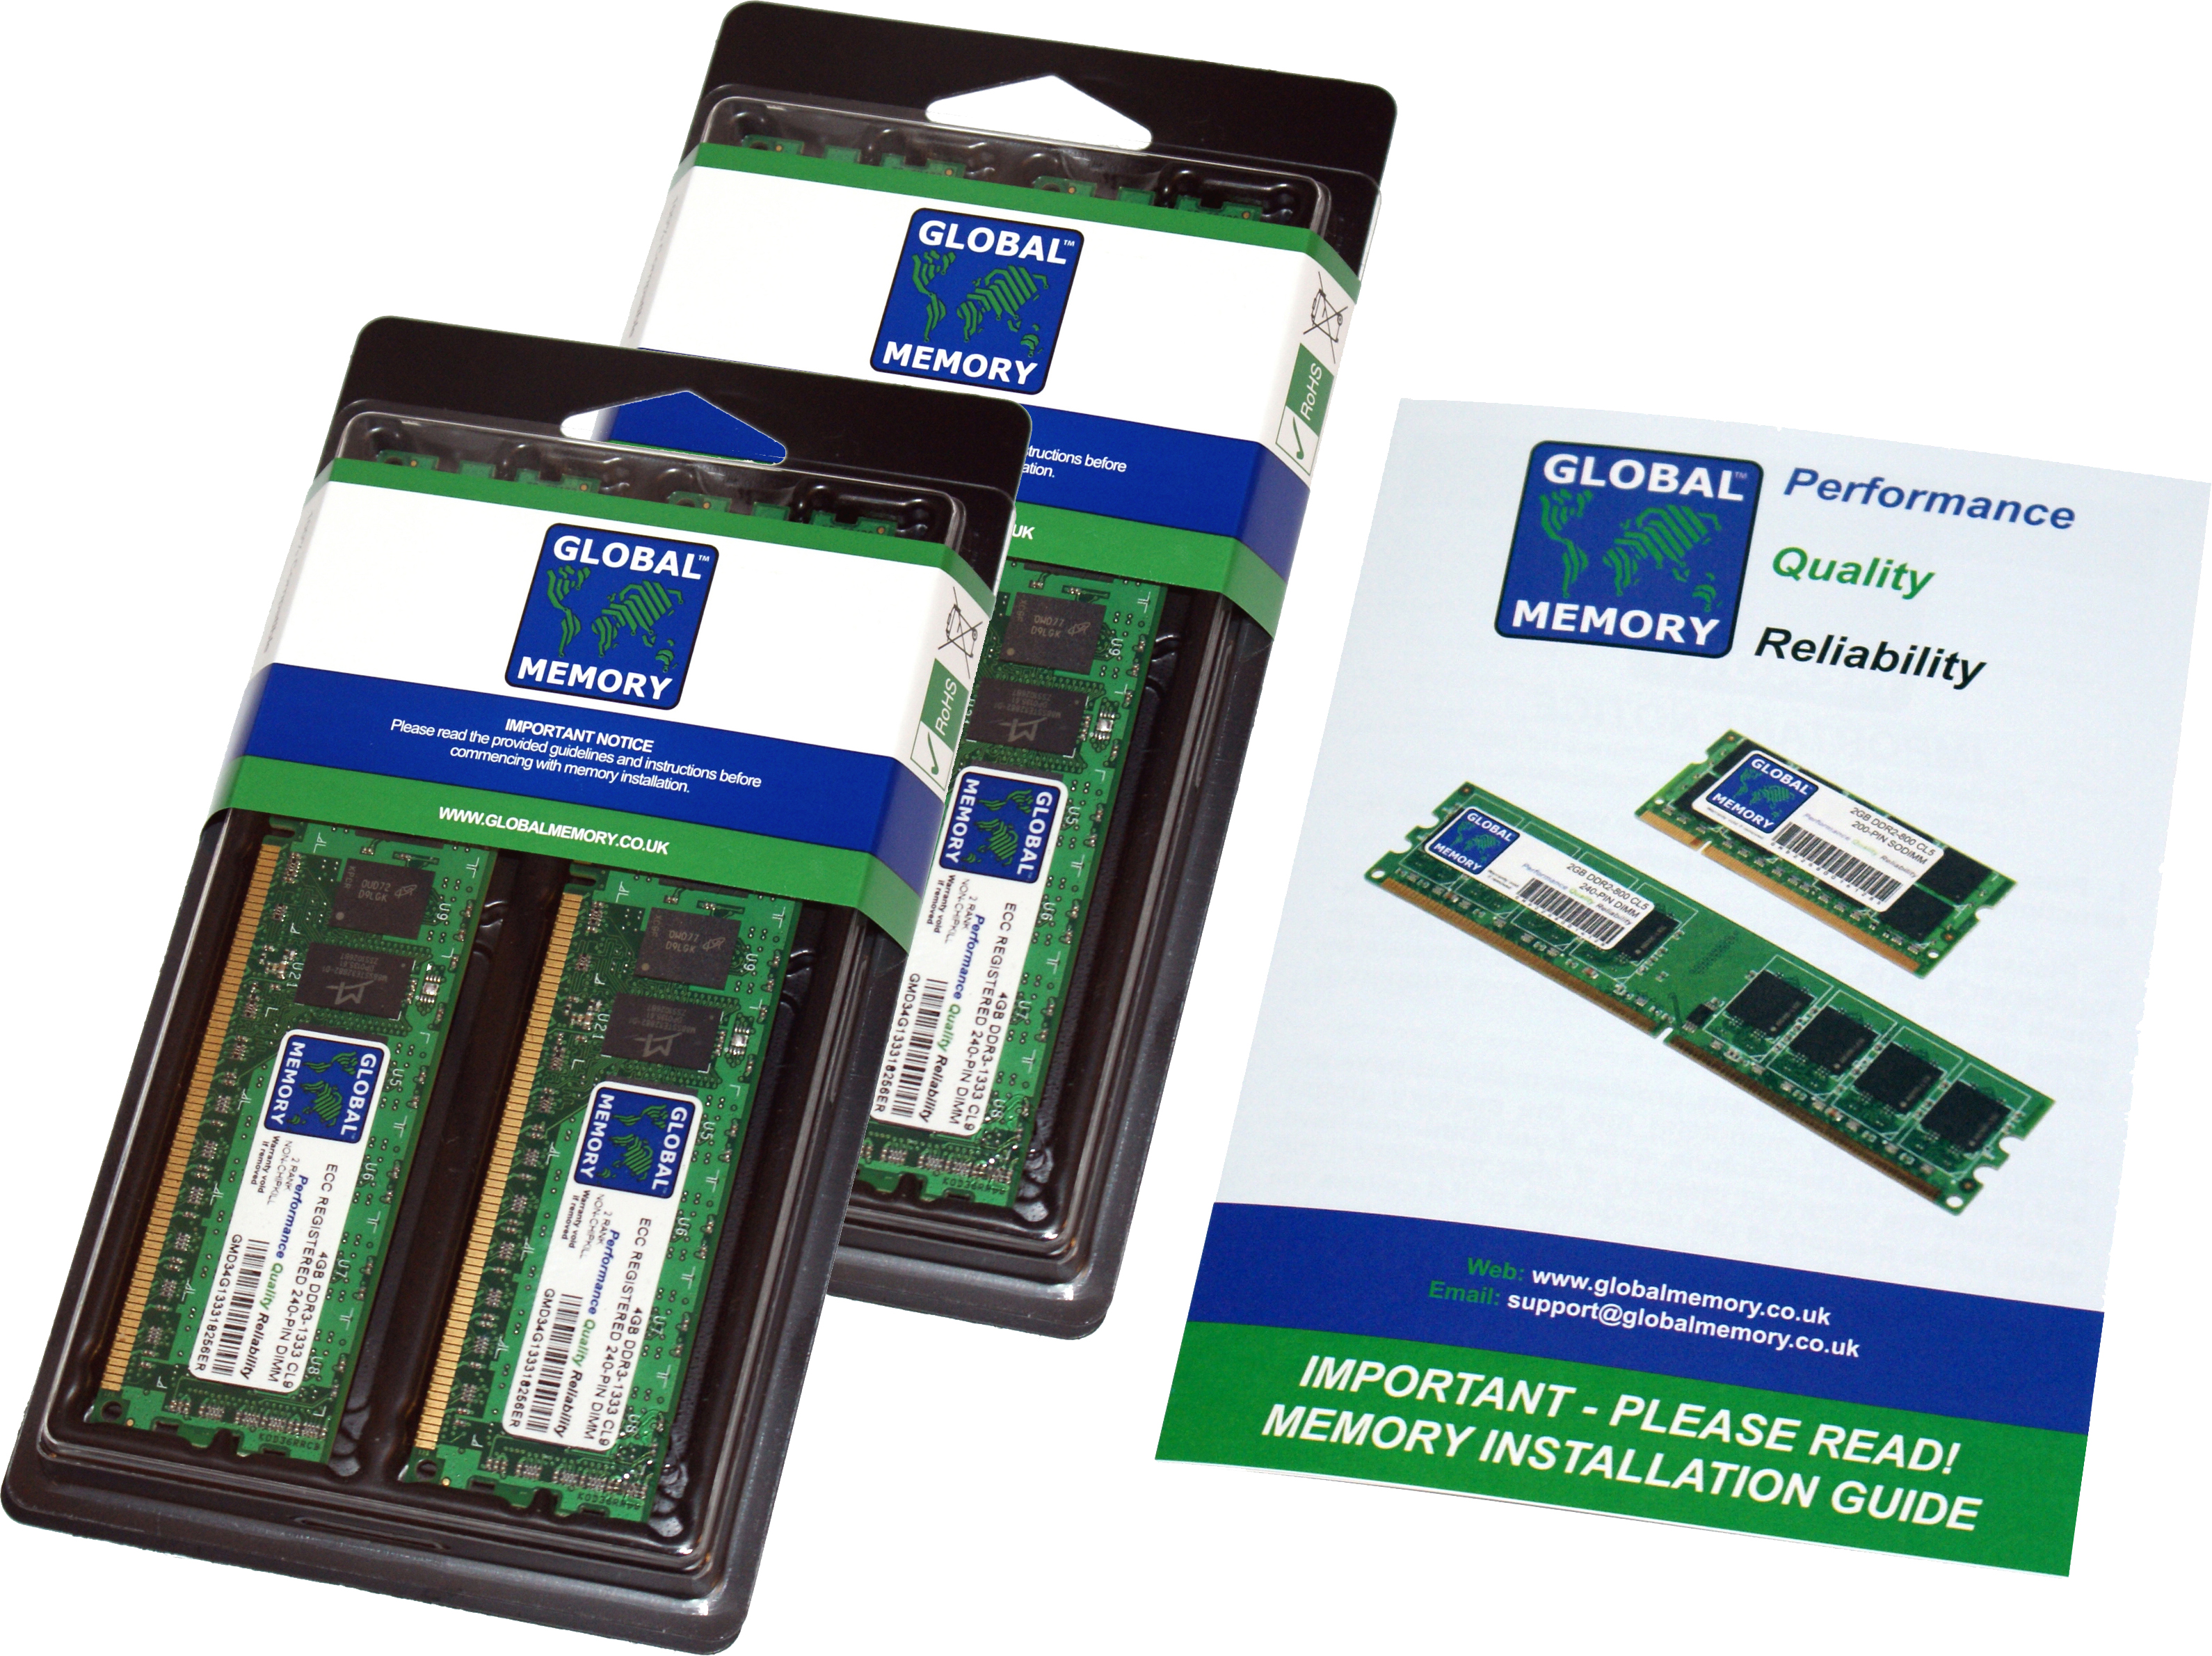 64GB (4 x 16GB) DDR4 3200MHz PC4-25600 288-PIN ECC REGISTERED DIMM (RDIMM) MEMORY RAM KIT FOR FUJITSU SERVERS/WORKSTATIONS (8 RANK KIT CHIPKILL)